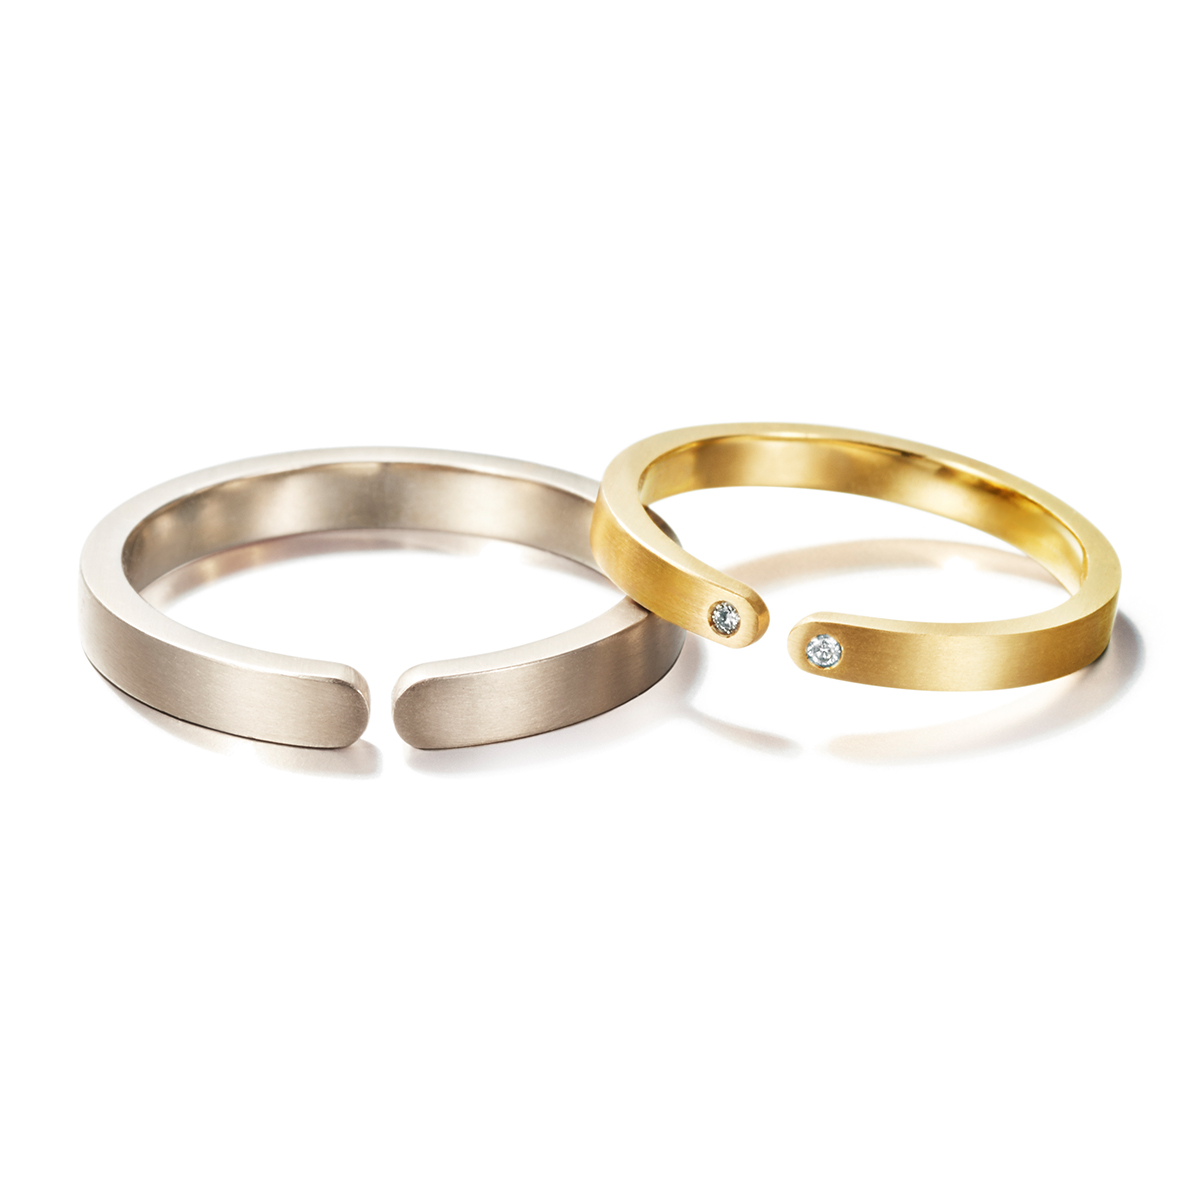 Lia Di Gregorio | Items - Wedding Rings | H.P.FRANCE BIJOUX BRIDAL